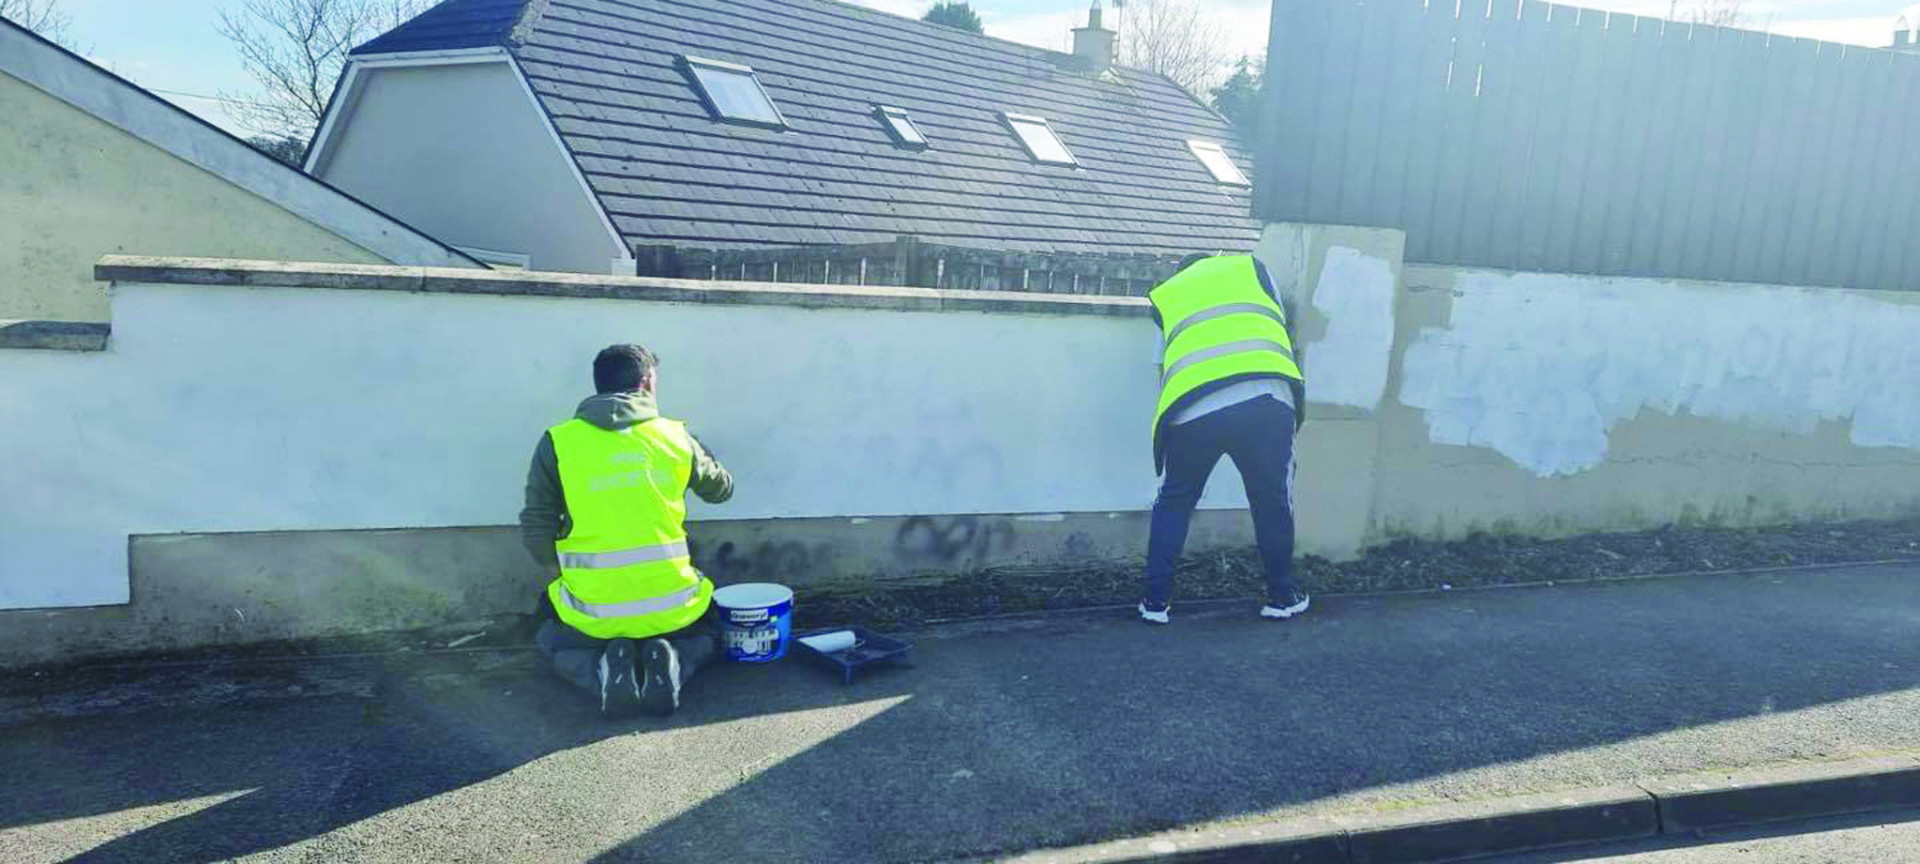 Lifford racist graffiti condemned